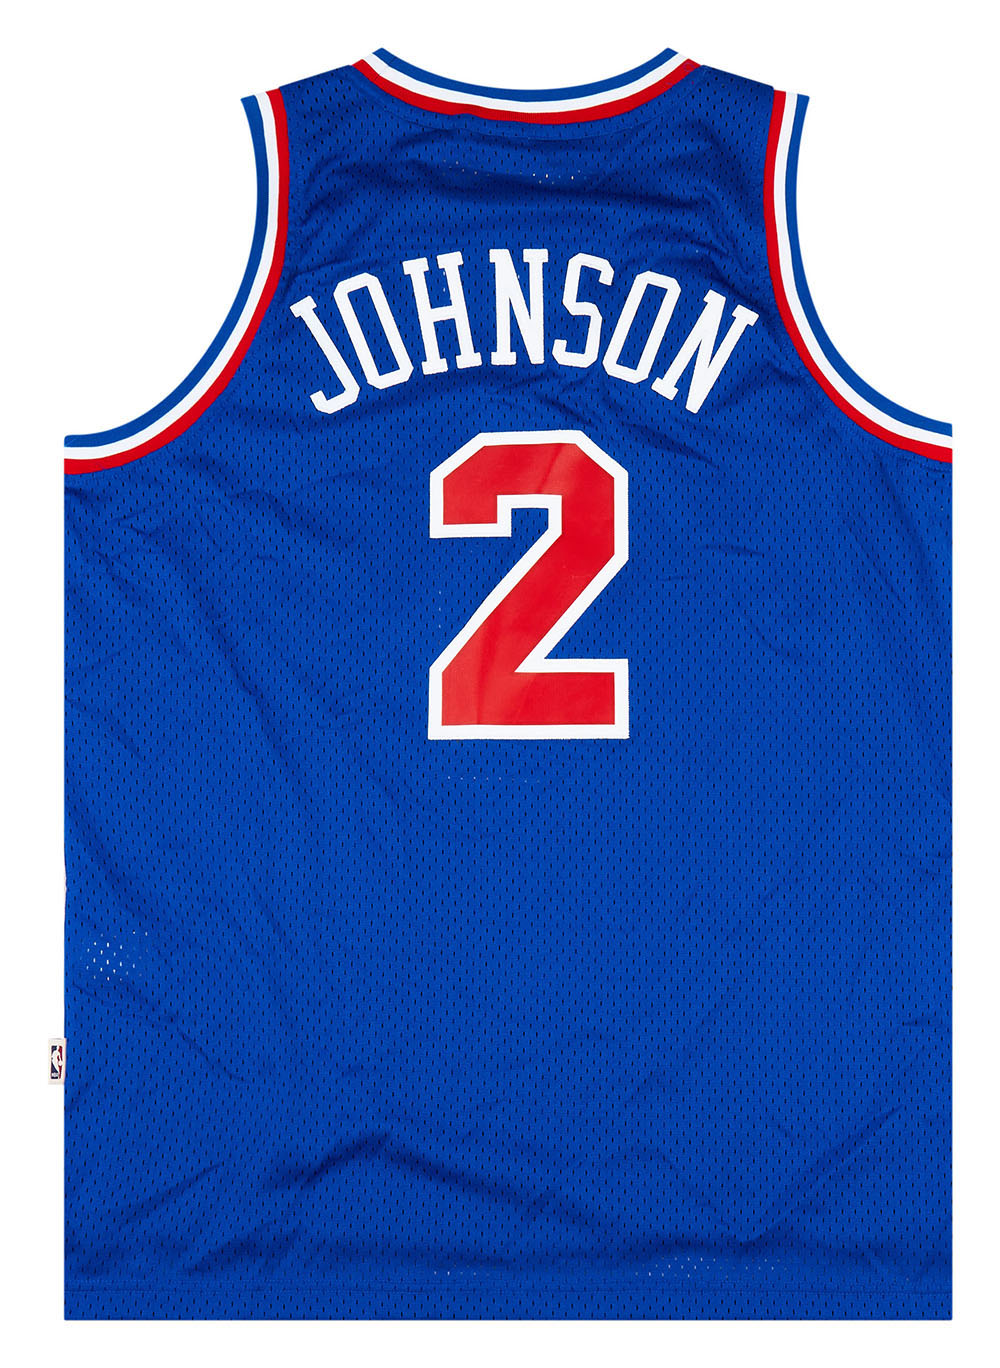 1993 NBA ALL-STAR GAME JOHNSON #2 ADIDAS HARDWOOD CLASSICS SWINGMAN JERSEY L - W/TAGS